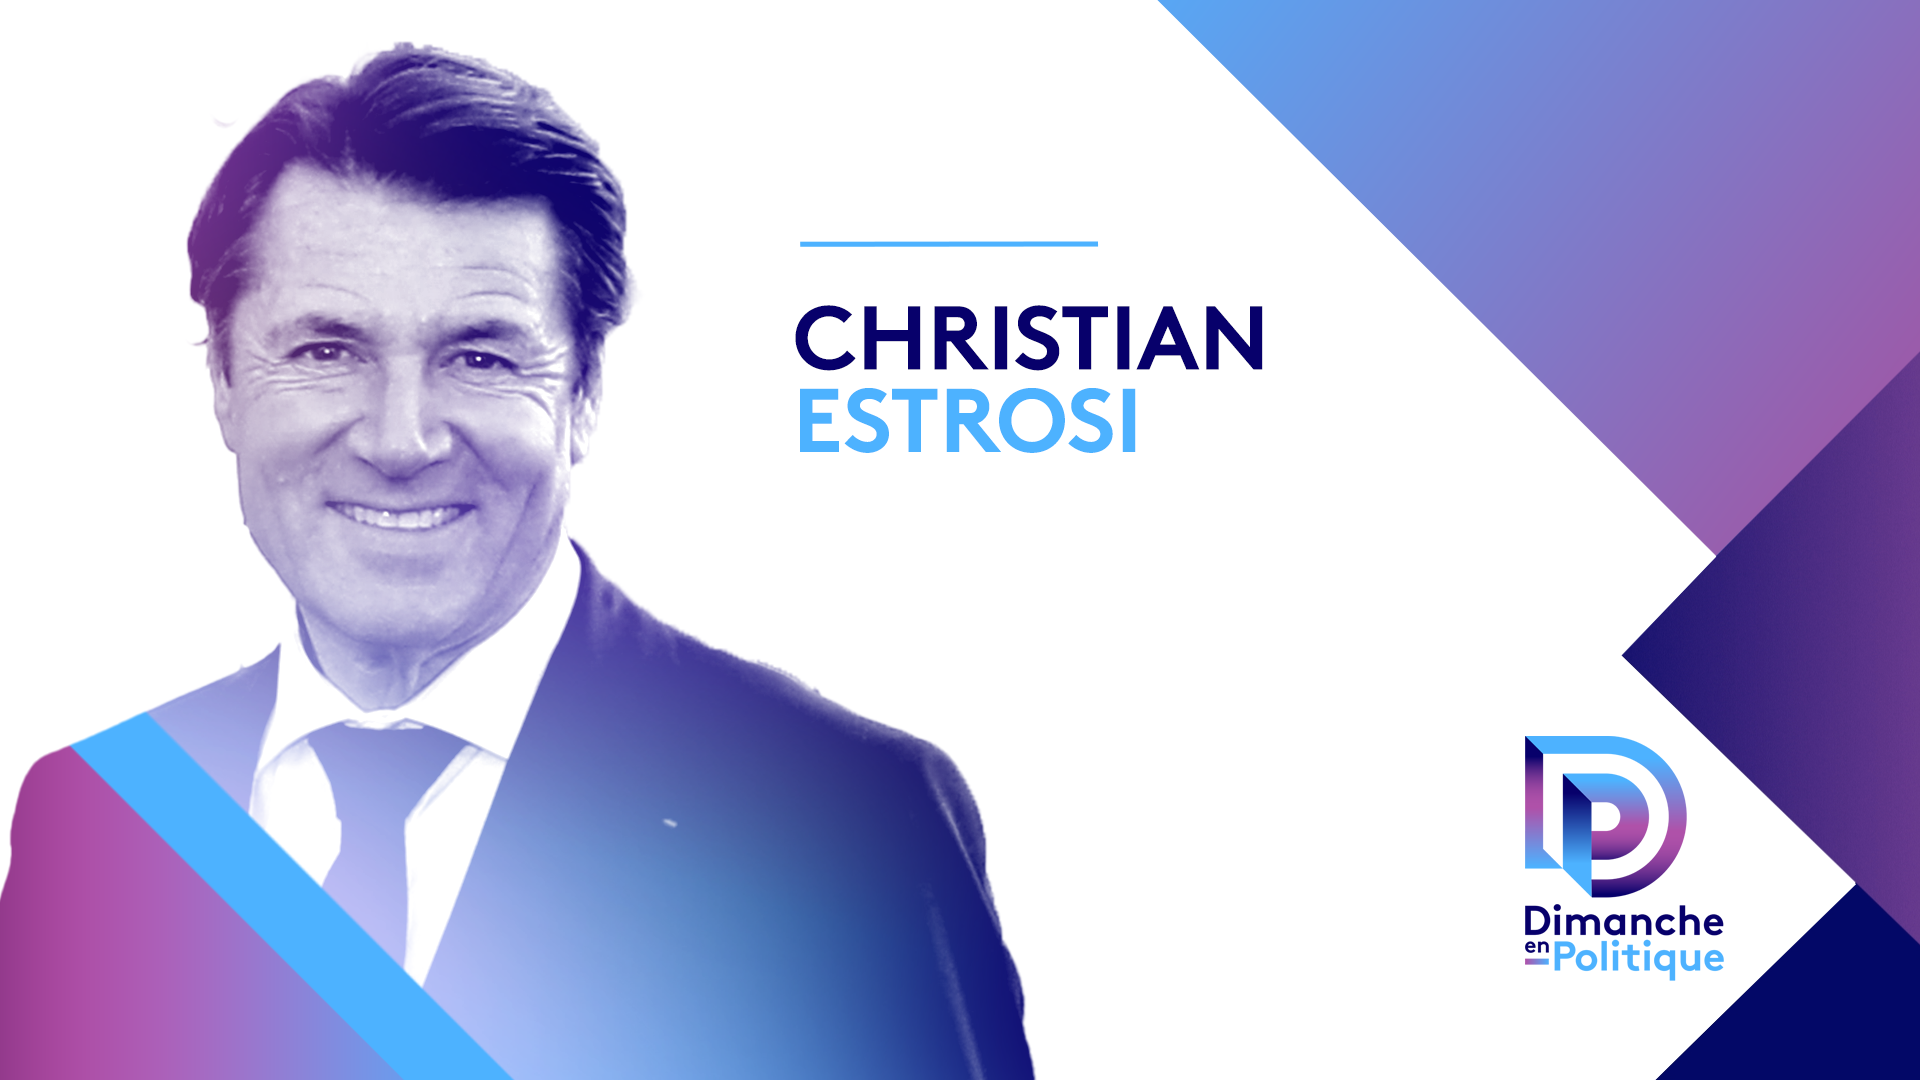 Christian estrosi